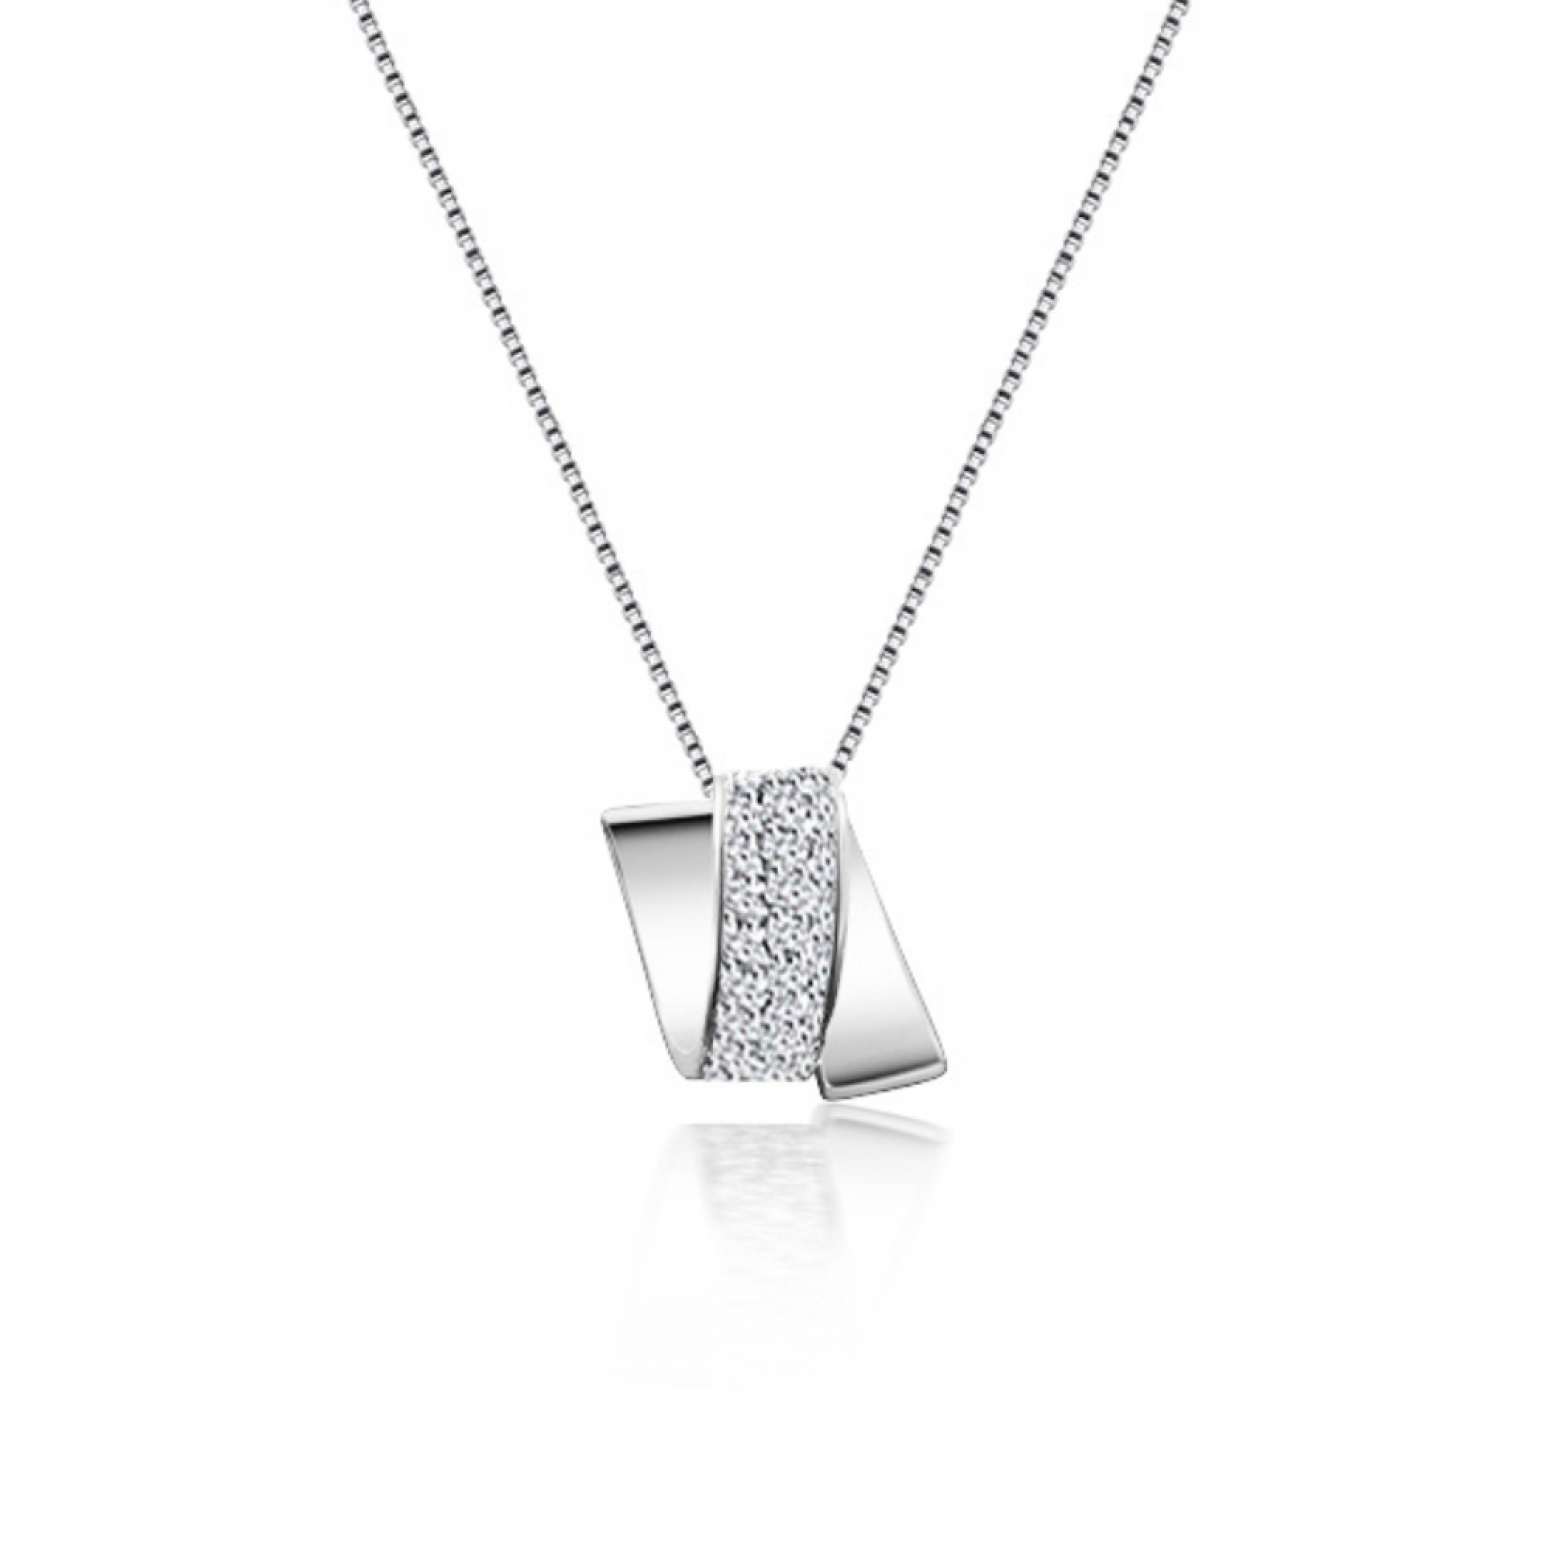 Multistone necklace 18K white gold with diamonds 0.30ct, VS1, G me0204 NECKLACES Κοσμηματα - chrilia.gr